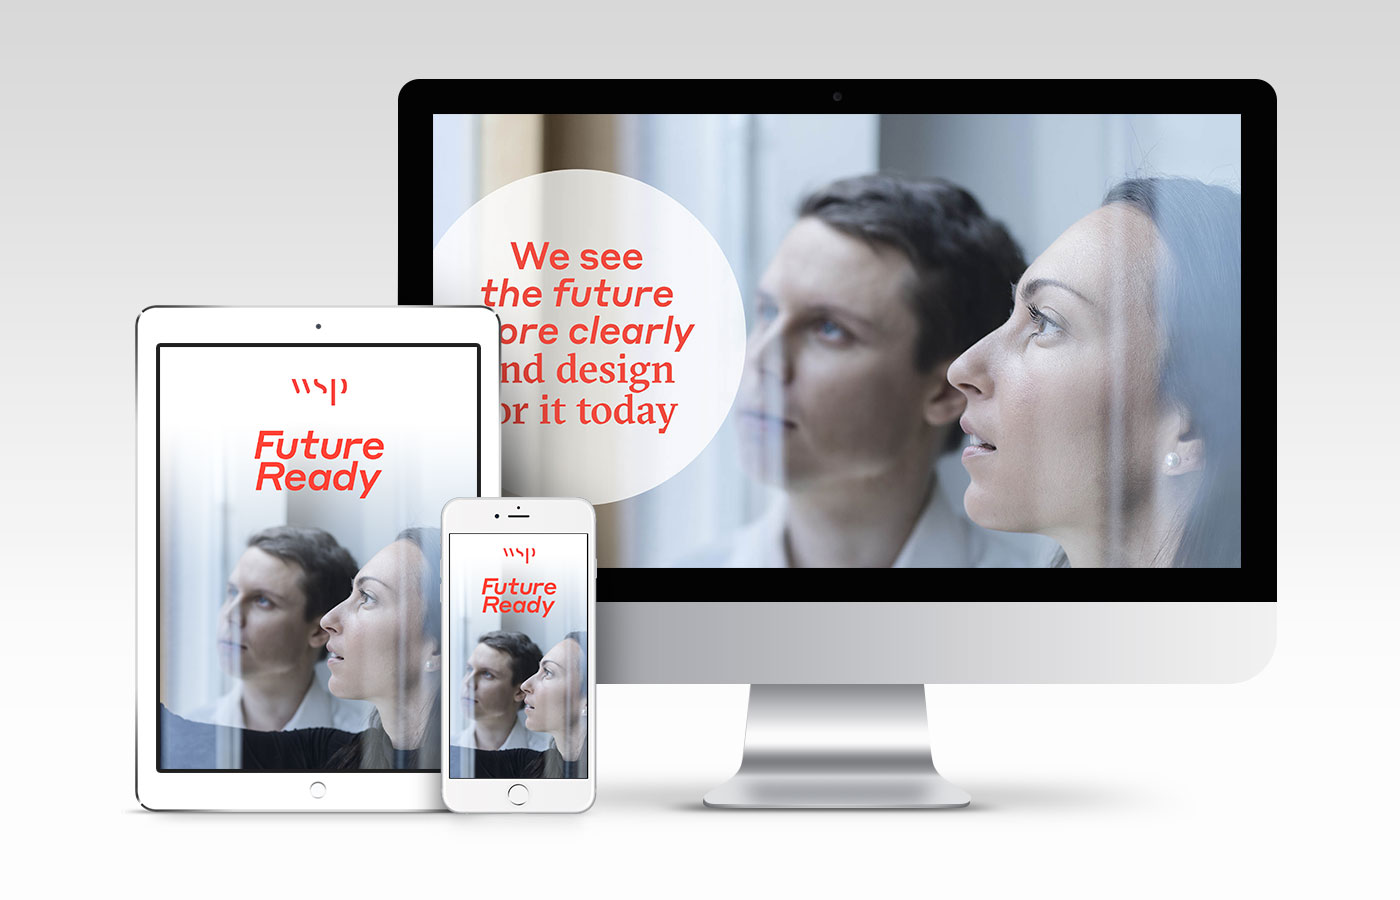 wsp_future_ready_digital